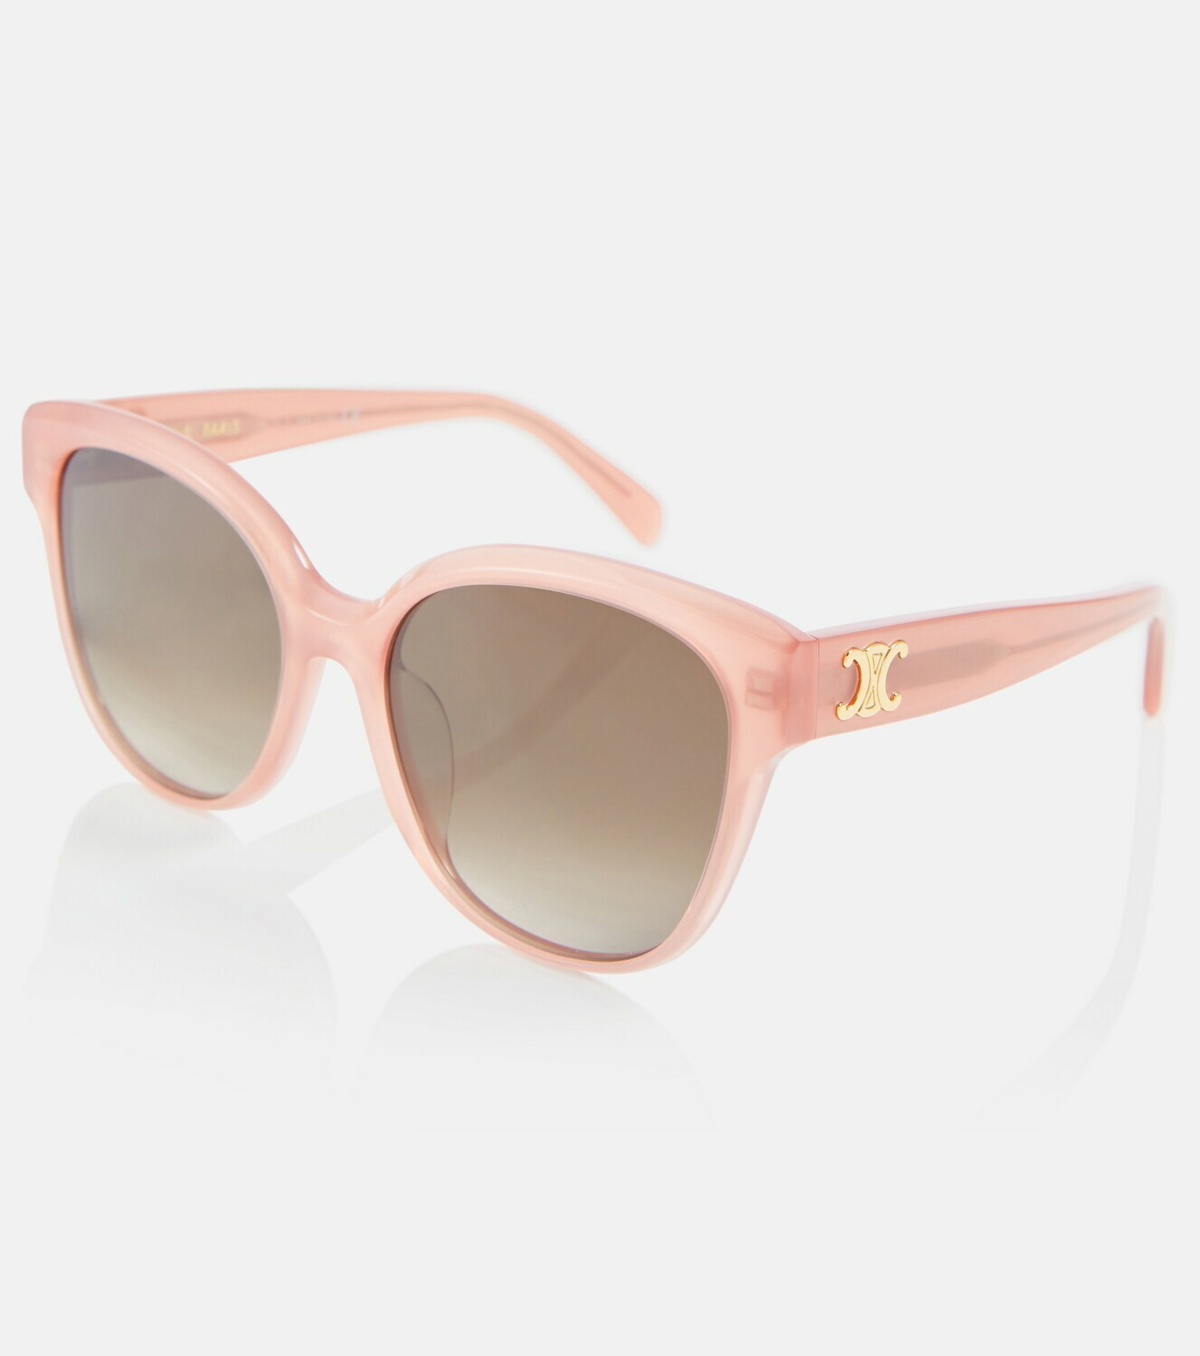 Celine Eyewear Triomphe S167 Sunglasses Celine